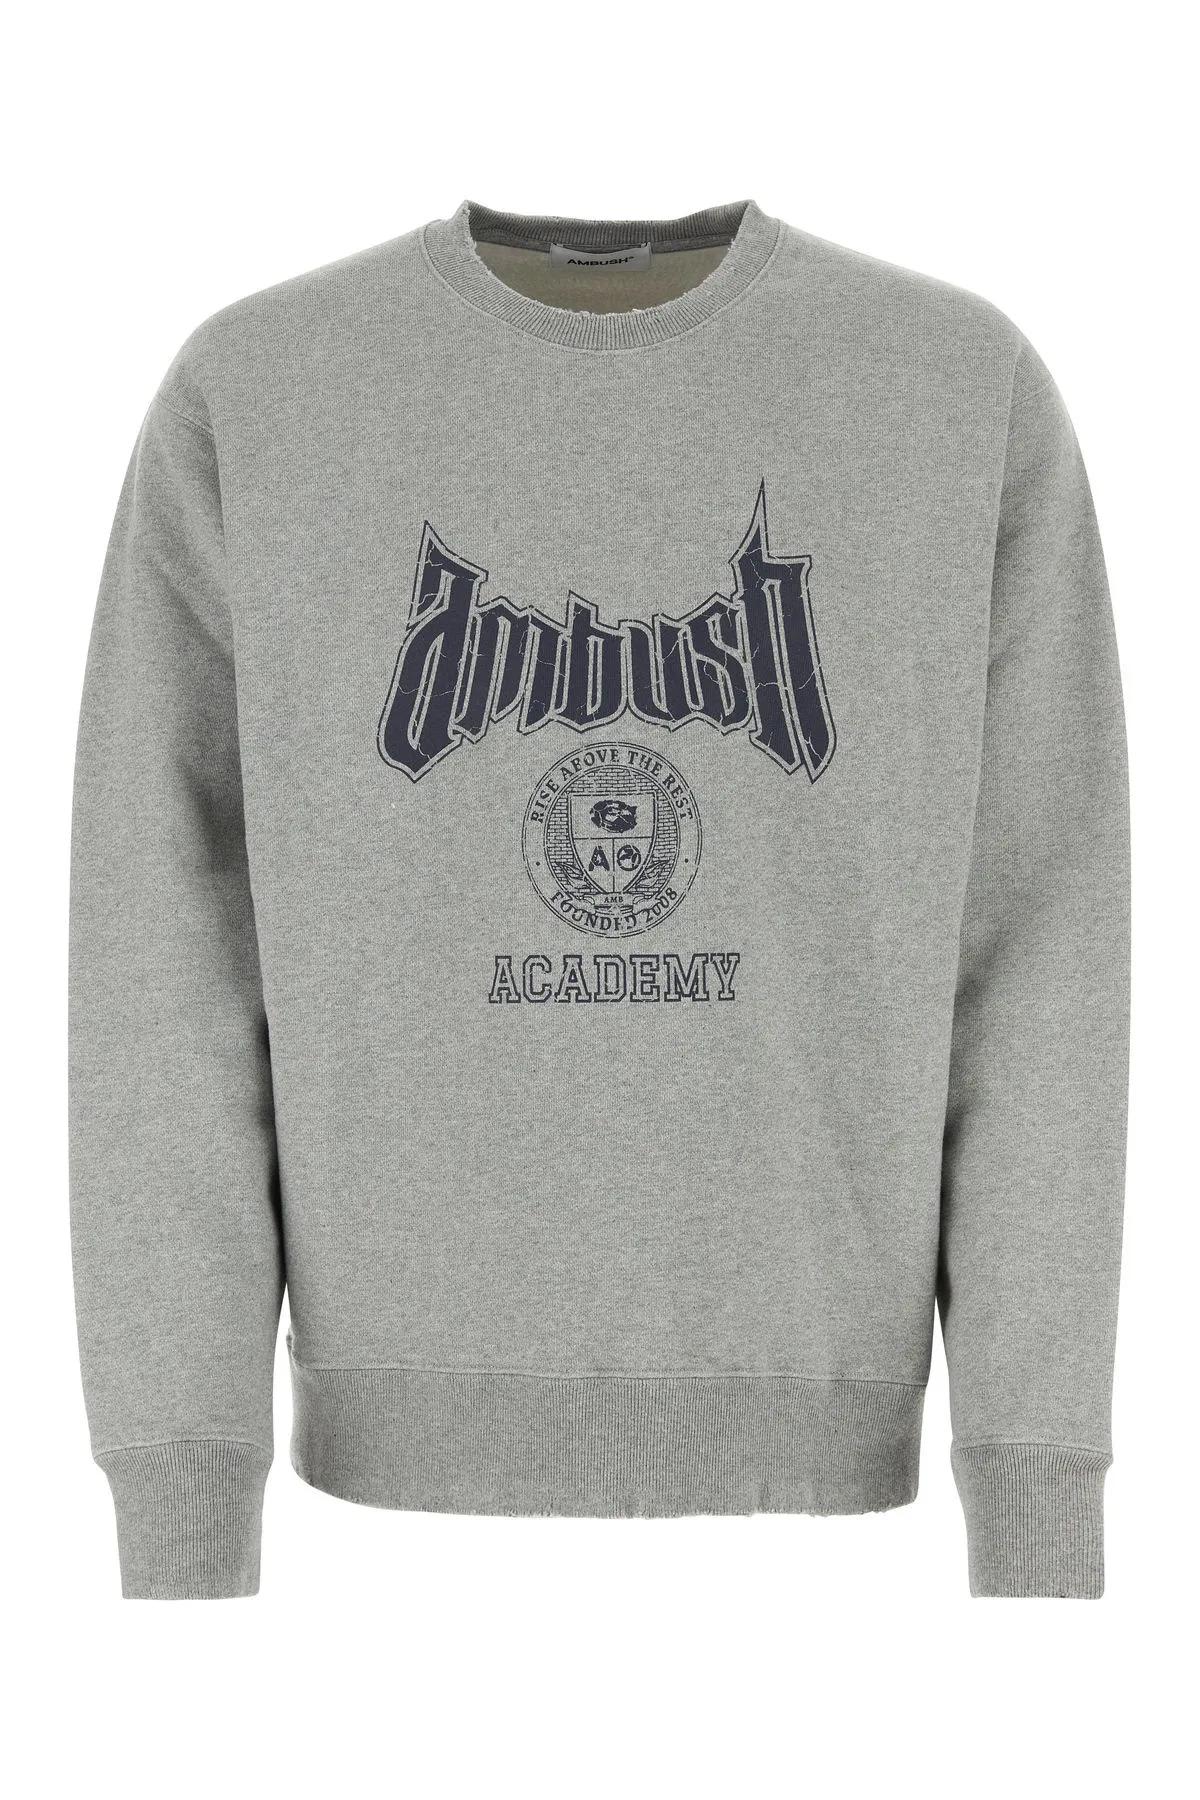 Shop Ambush Grey Cotton Blend Oversize Sweatshirt